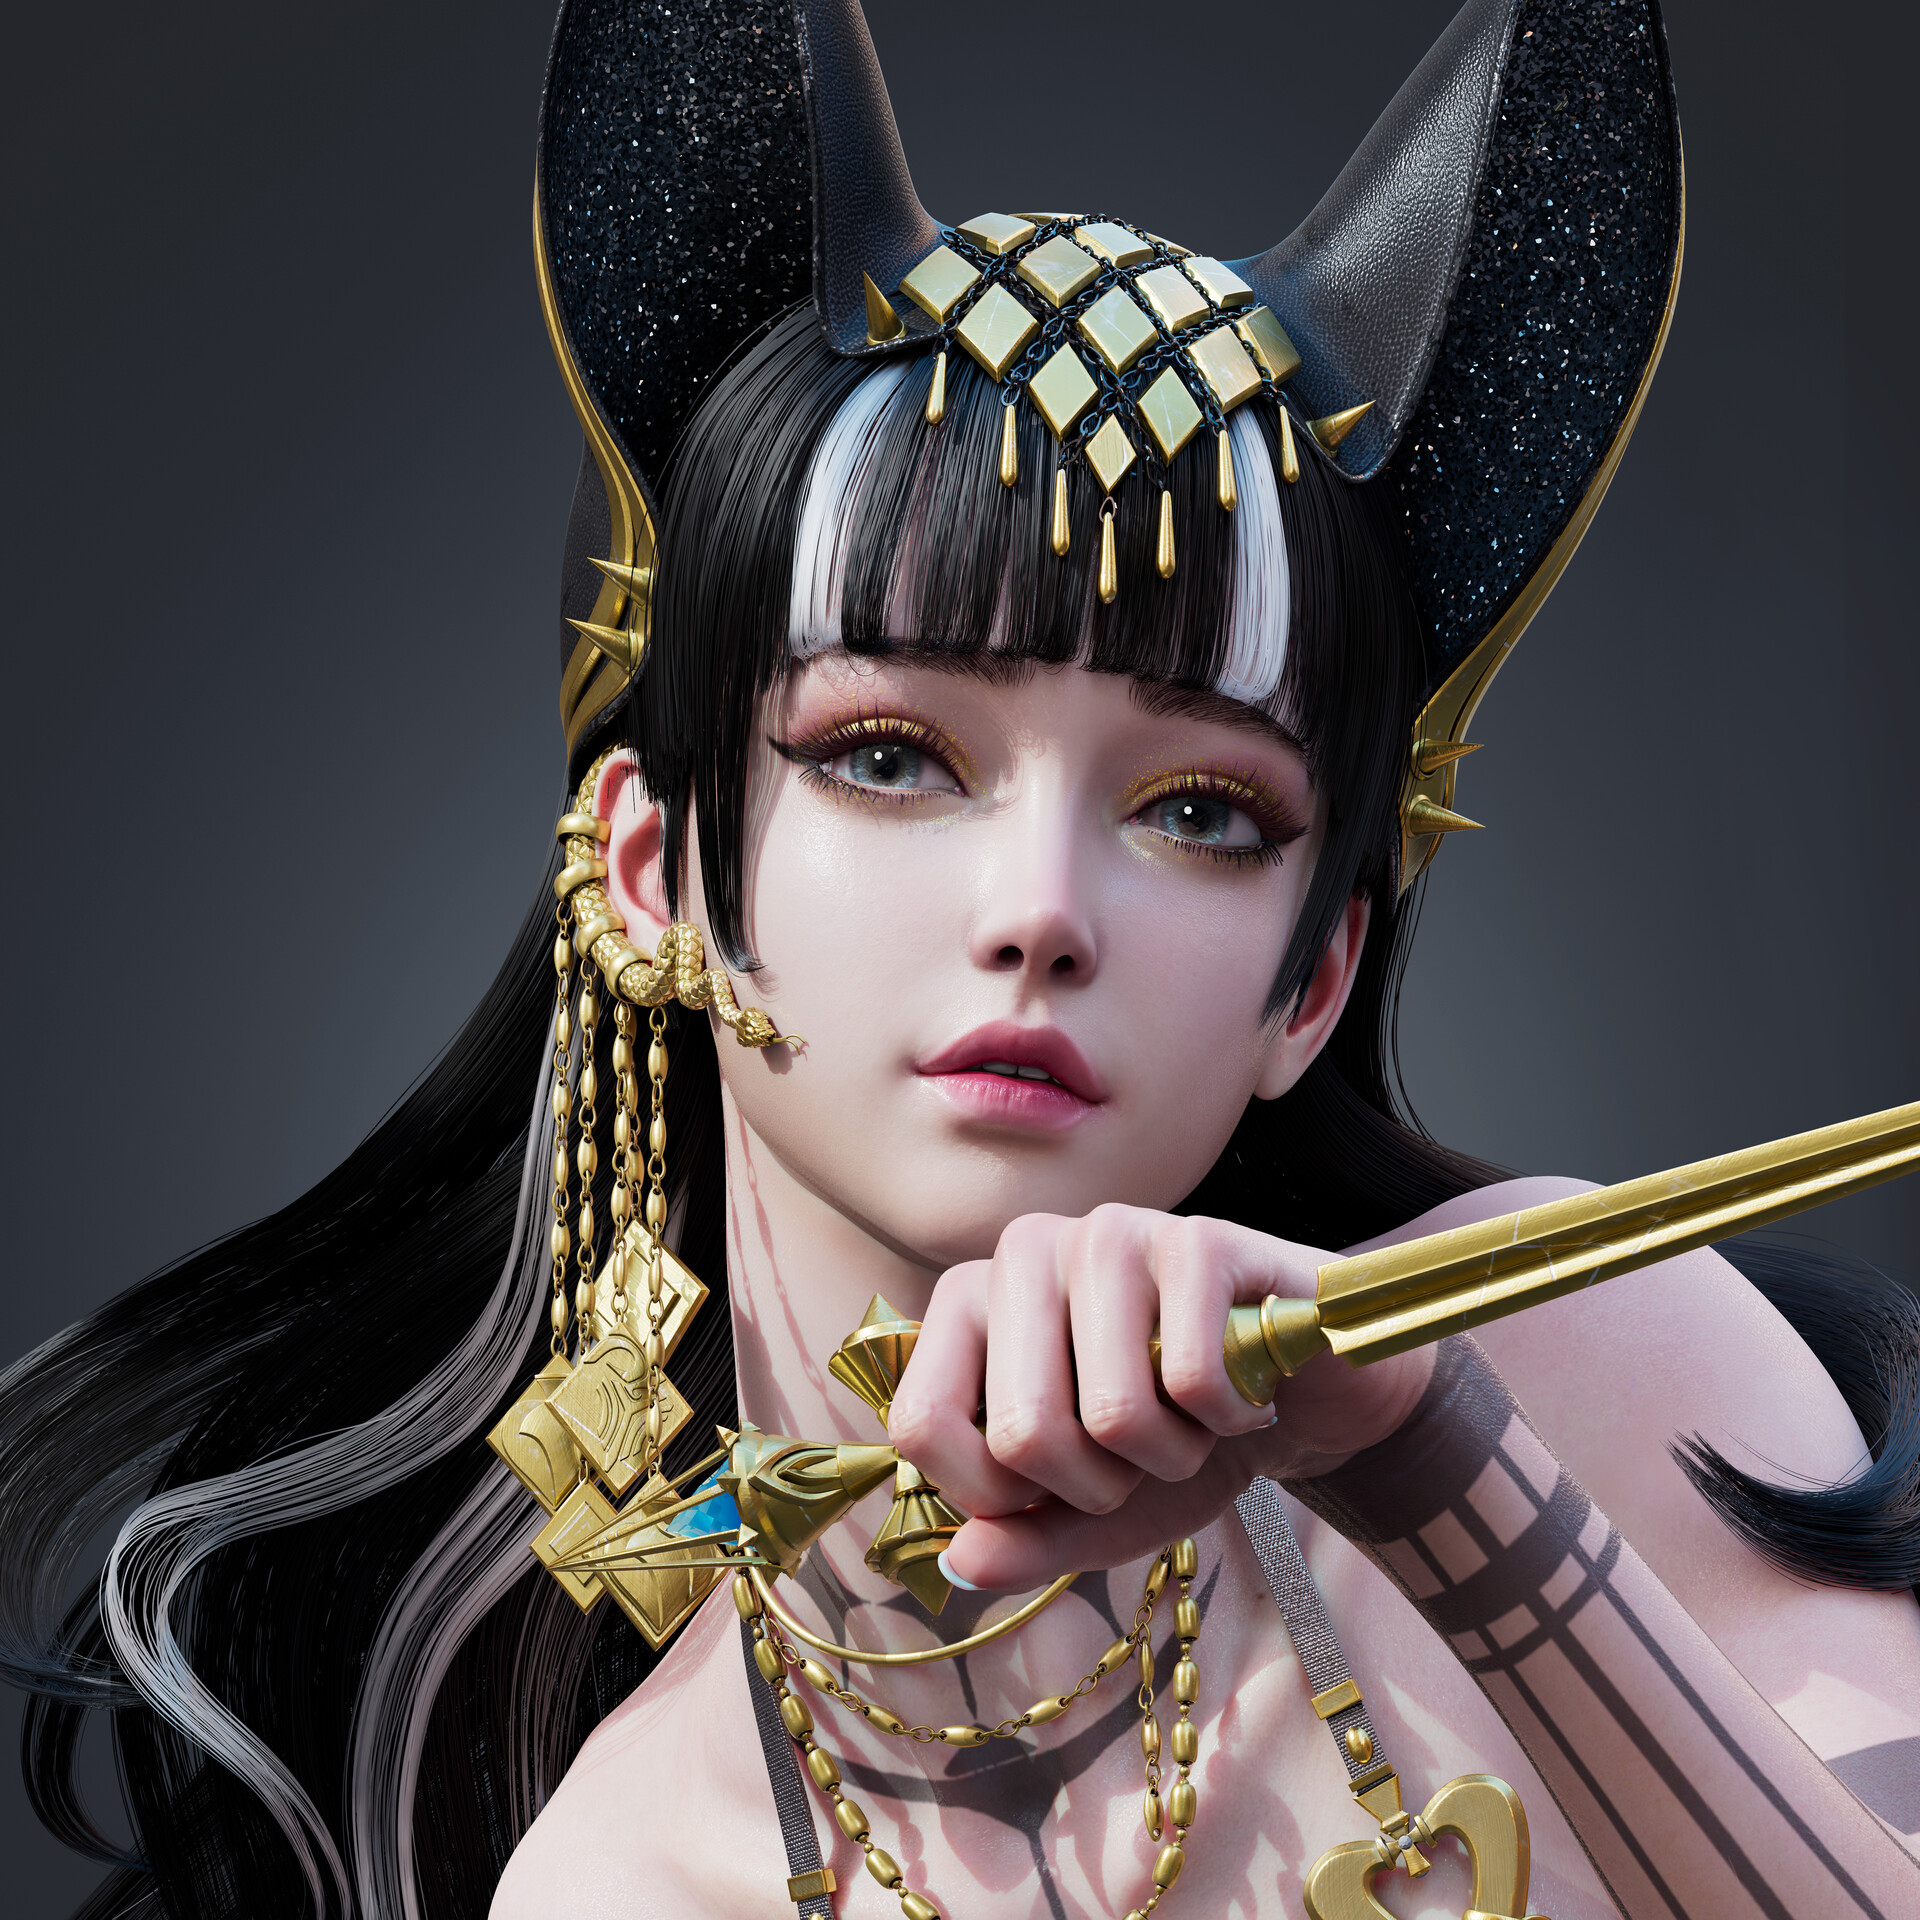 General 1920x1920 Tangqiuqiu CGI women dark hair long hair bangs jewelry hair accessories glamour gold weapon dagger simple background